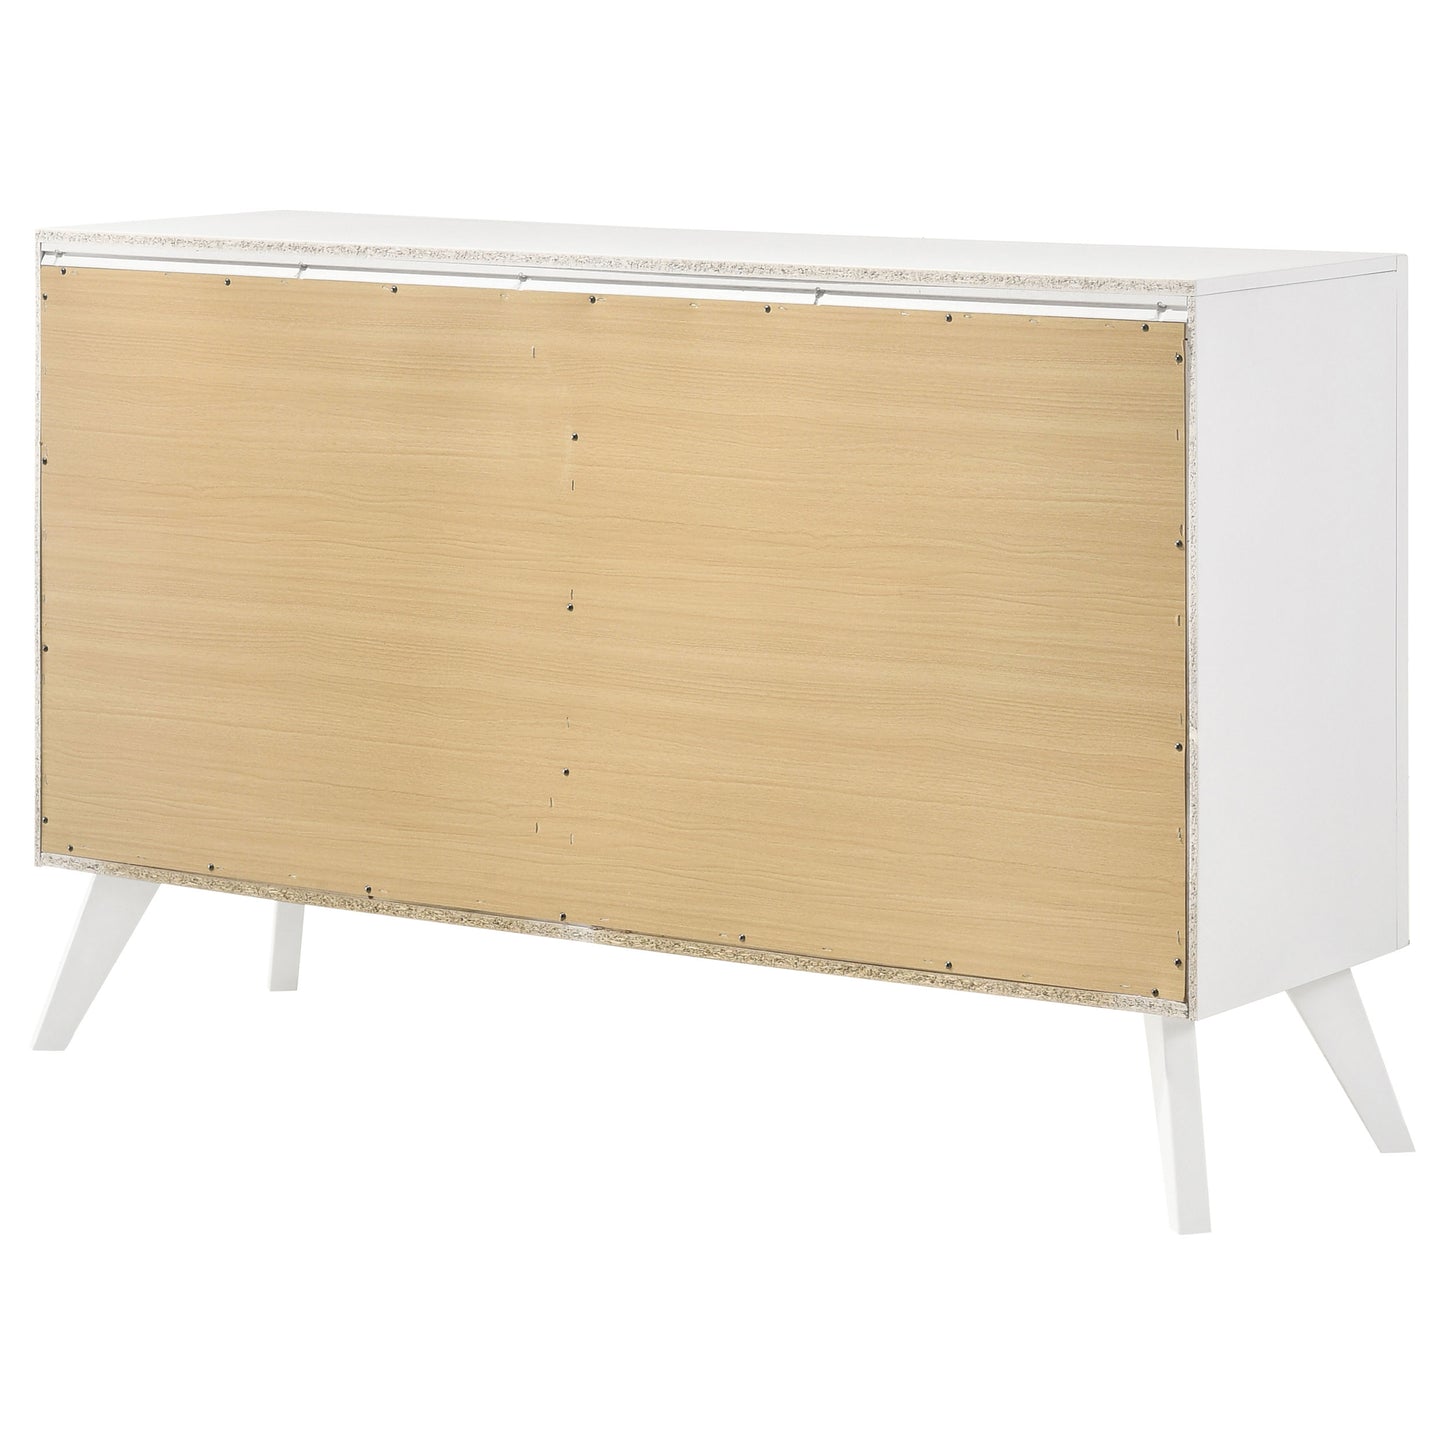 Janelle 6-drawer Dresser White